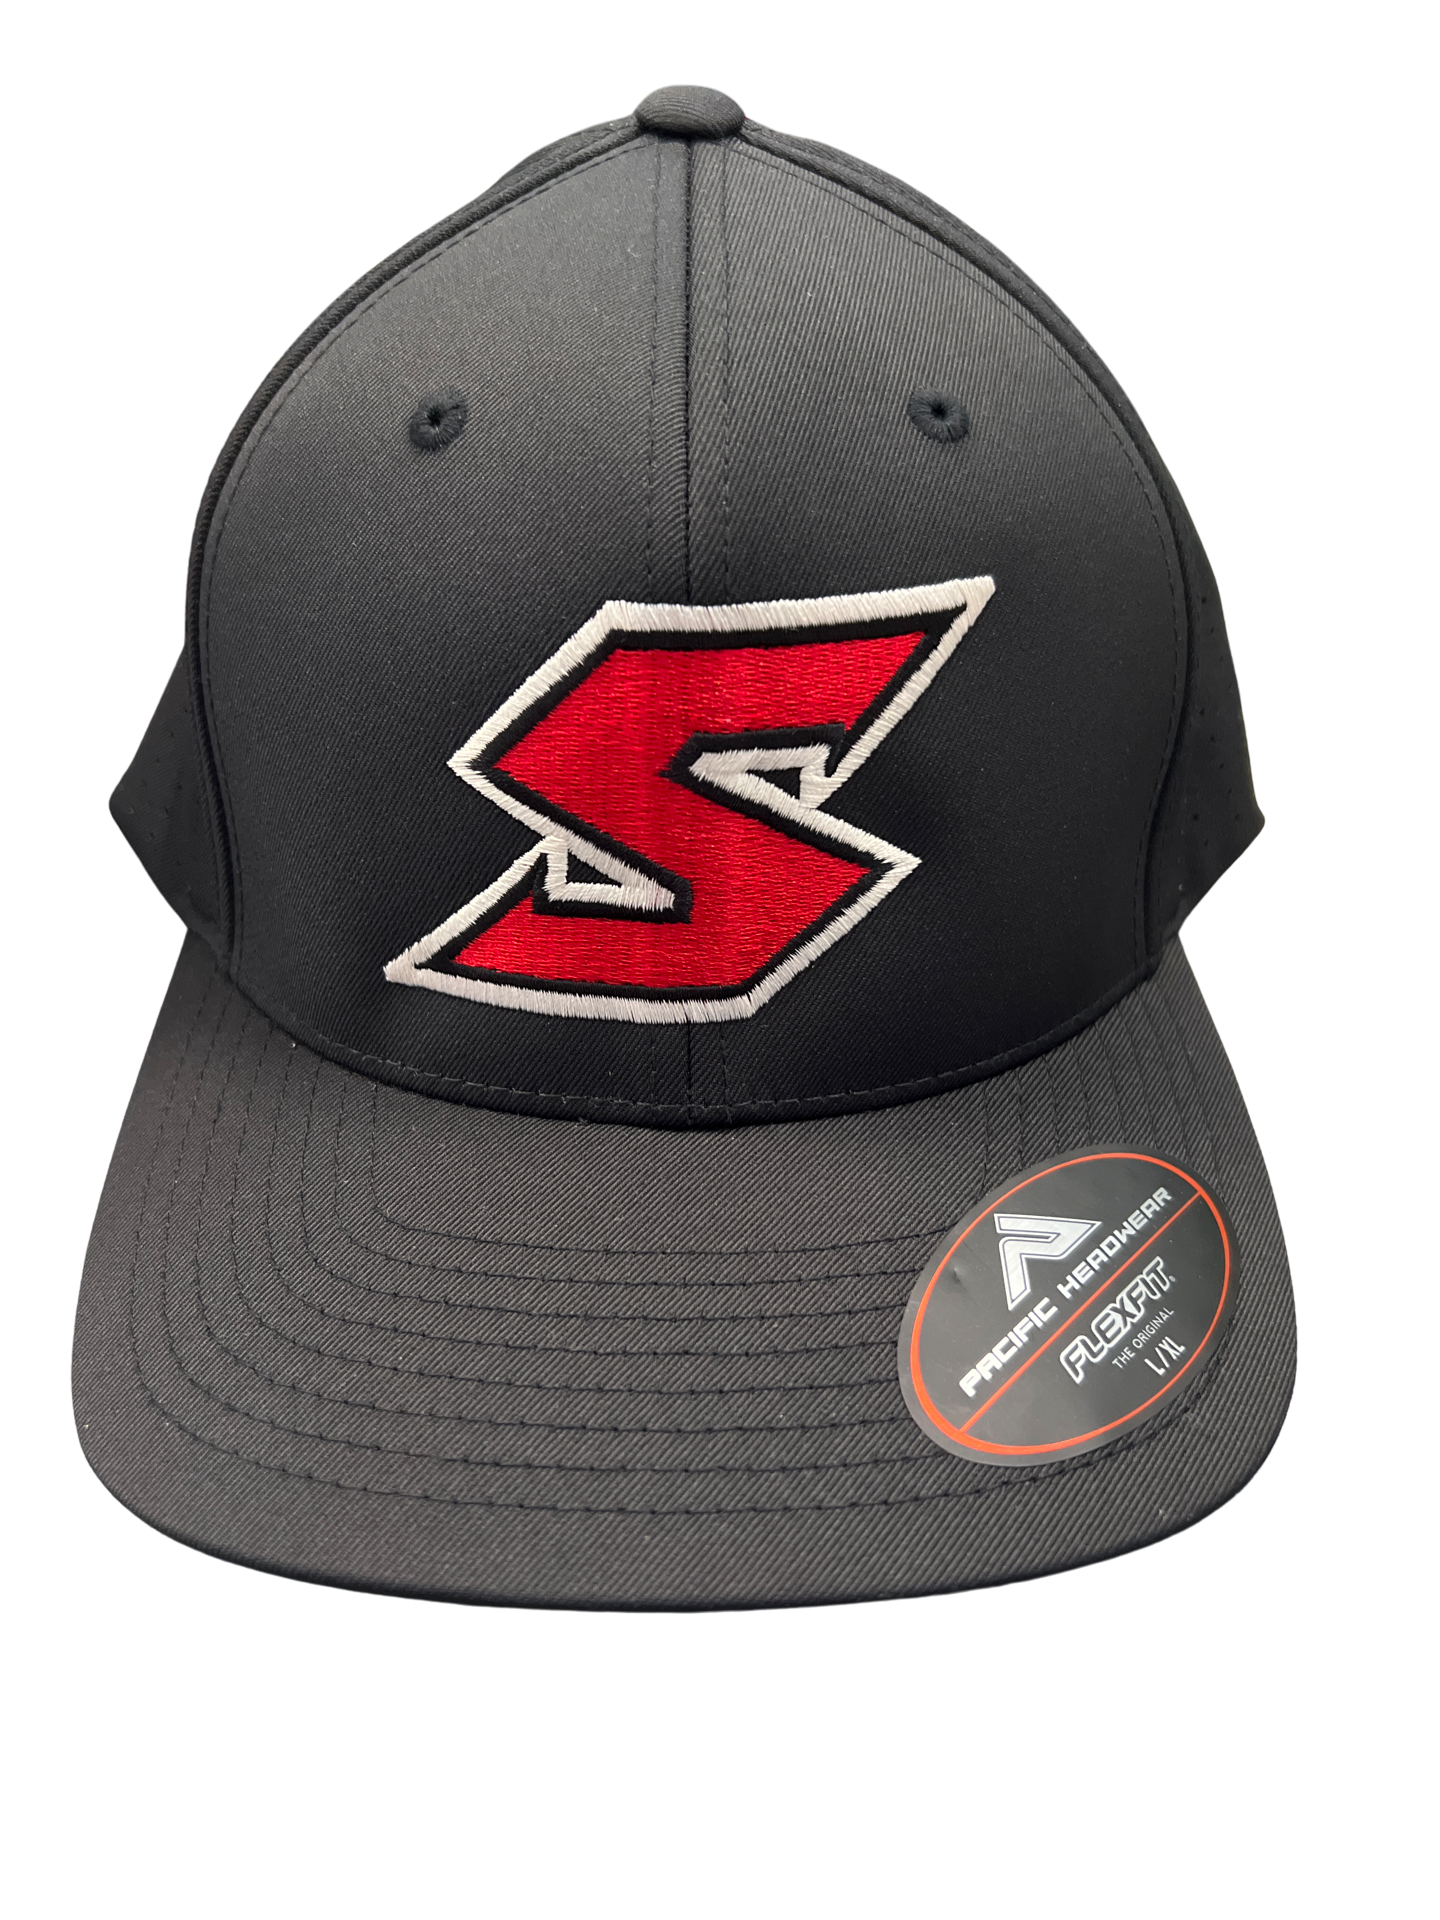 Suncoast Black/Red S 474 Flexfit Hat - Suncoast Softball